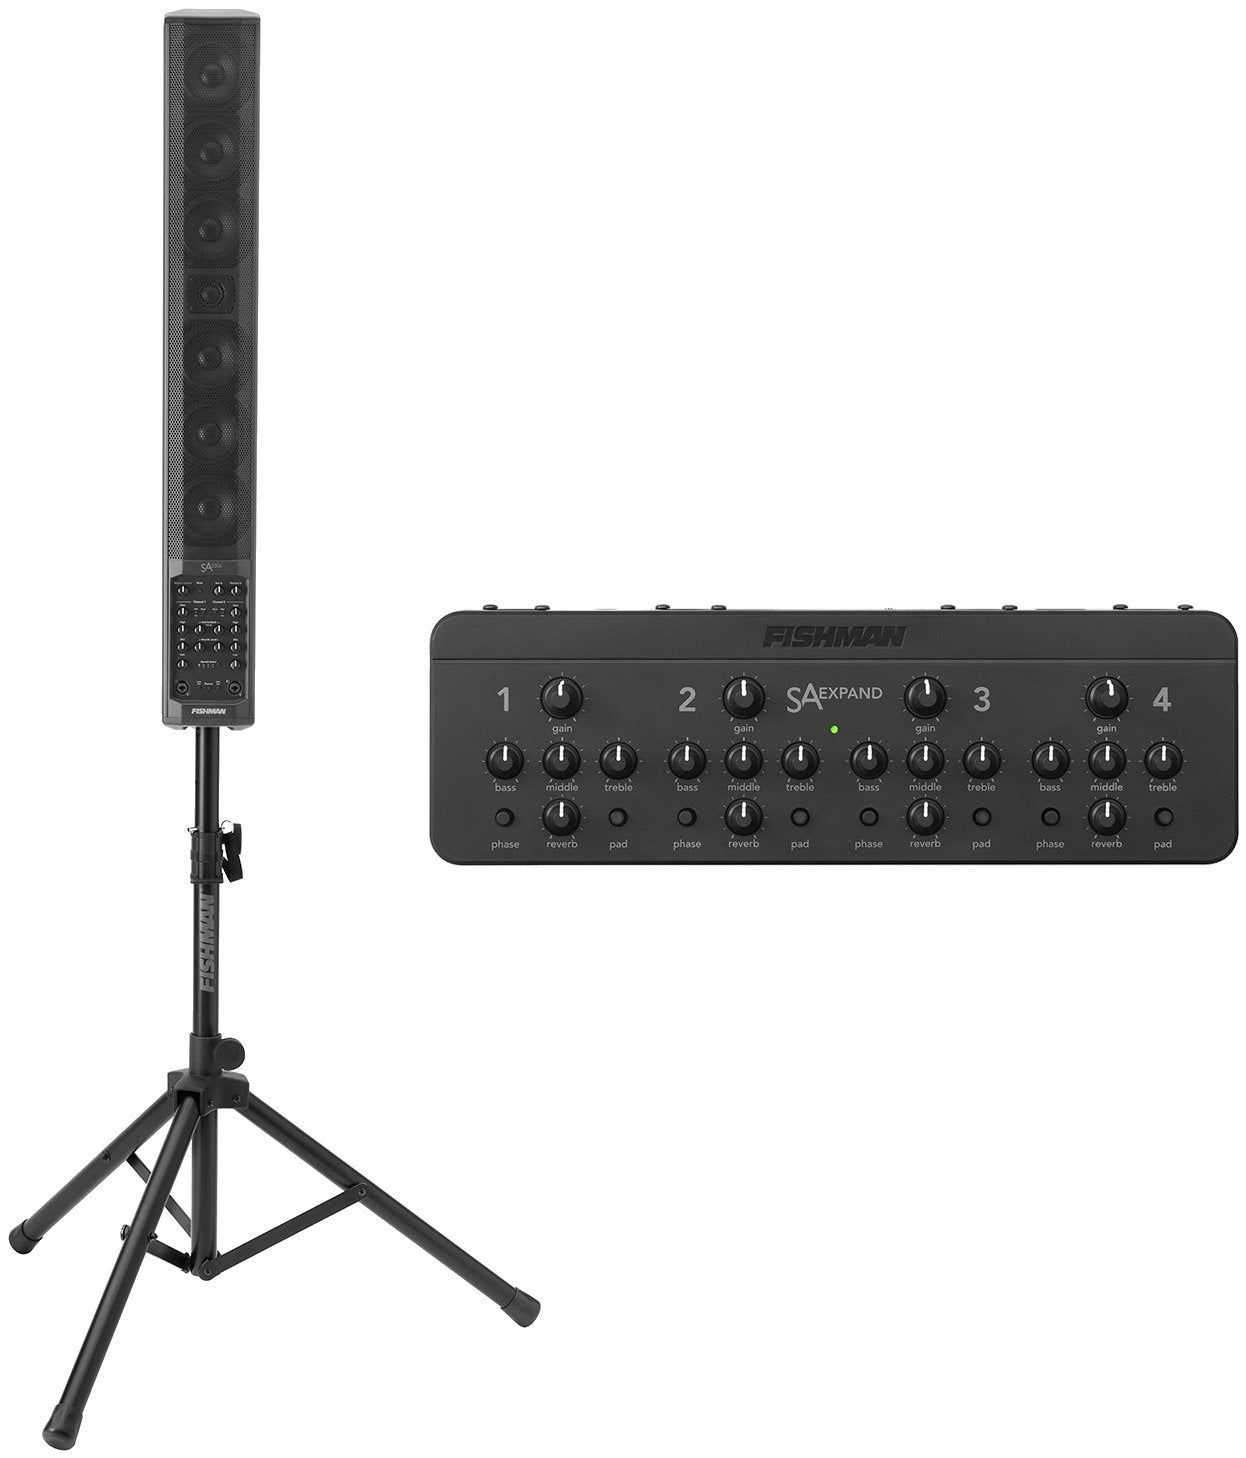 Fishman SA330X Single+ Performance Audio System